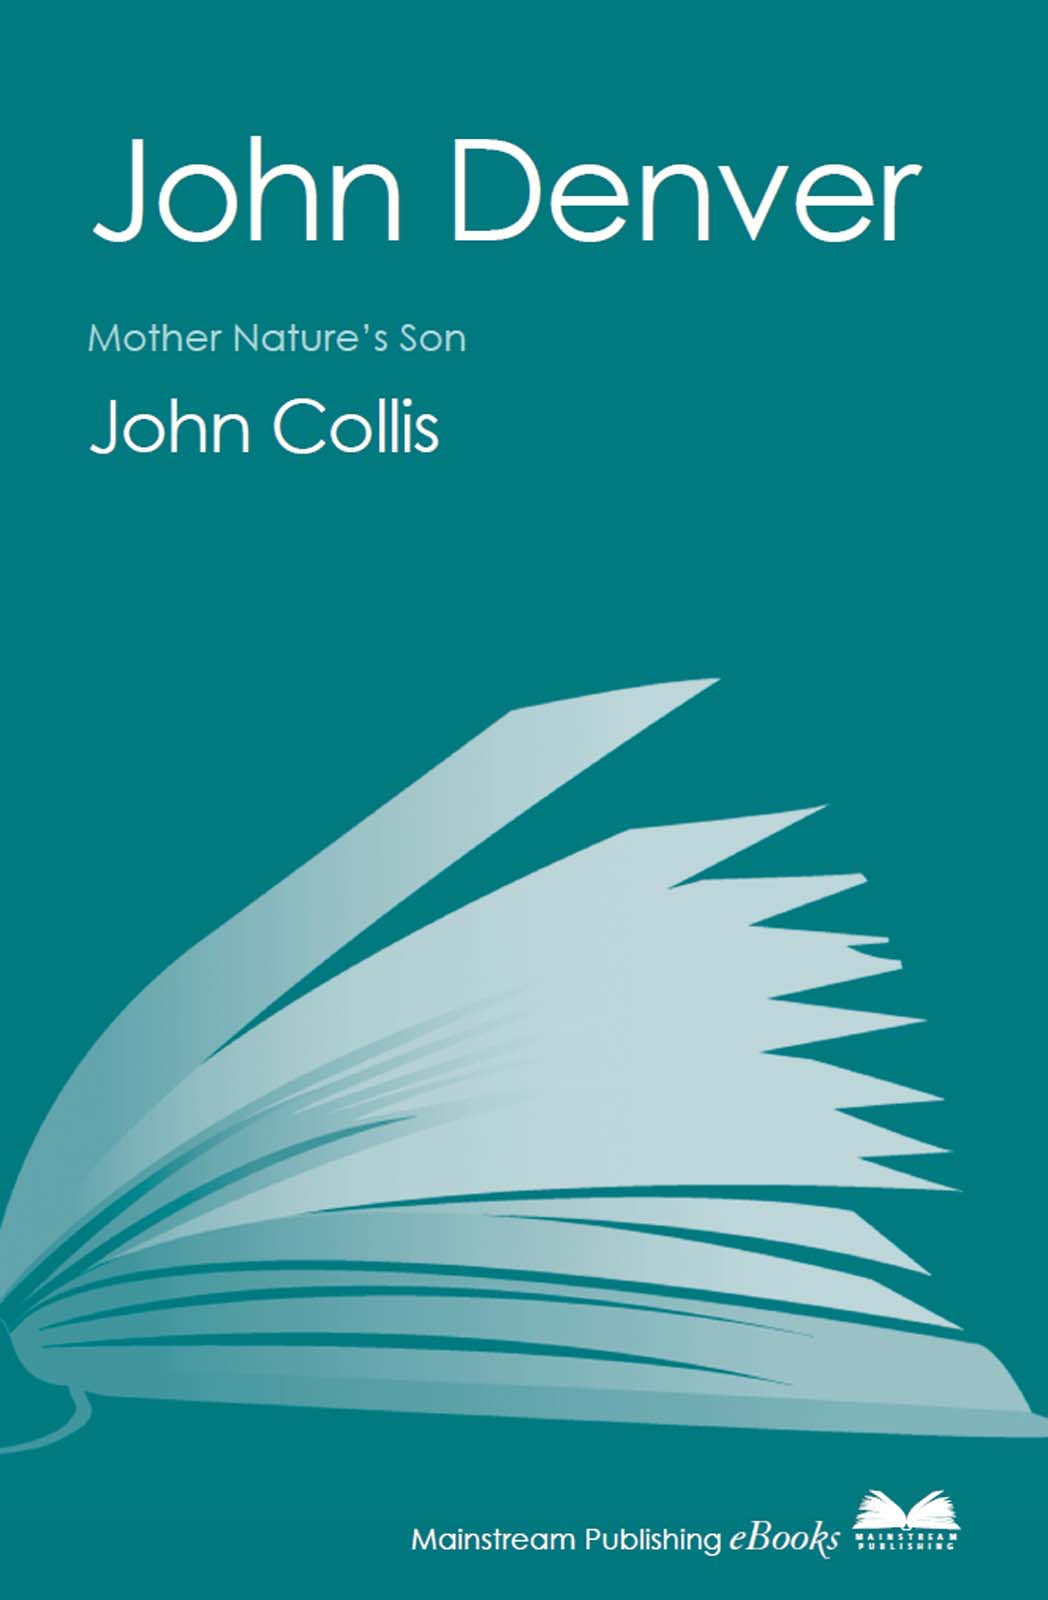 JOHN DENVER Mother Natures Son John Collis This eBook is copyright - photo 1